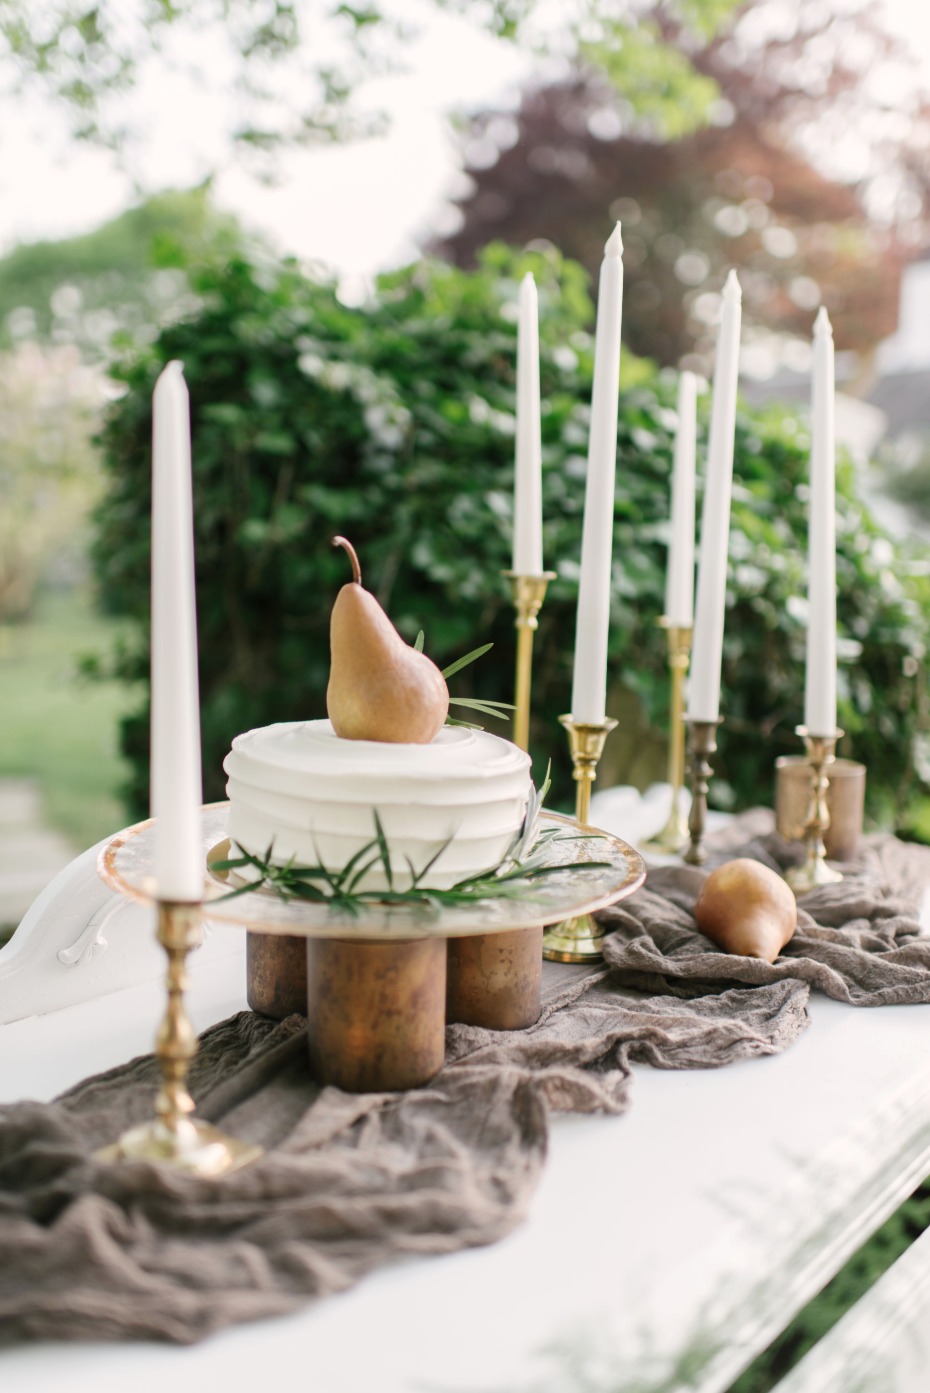 simple yet elegant wedding cake table